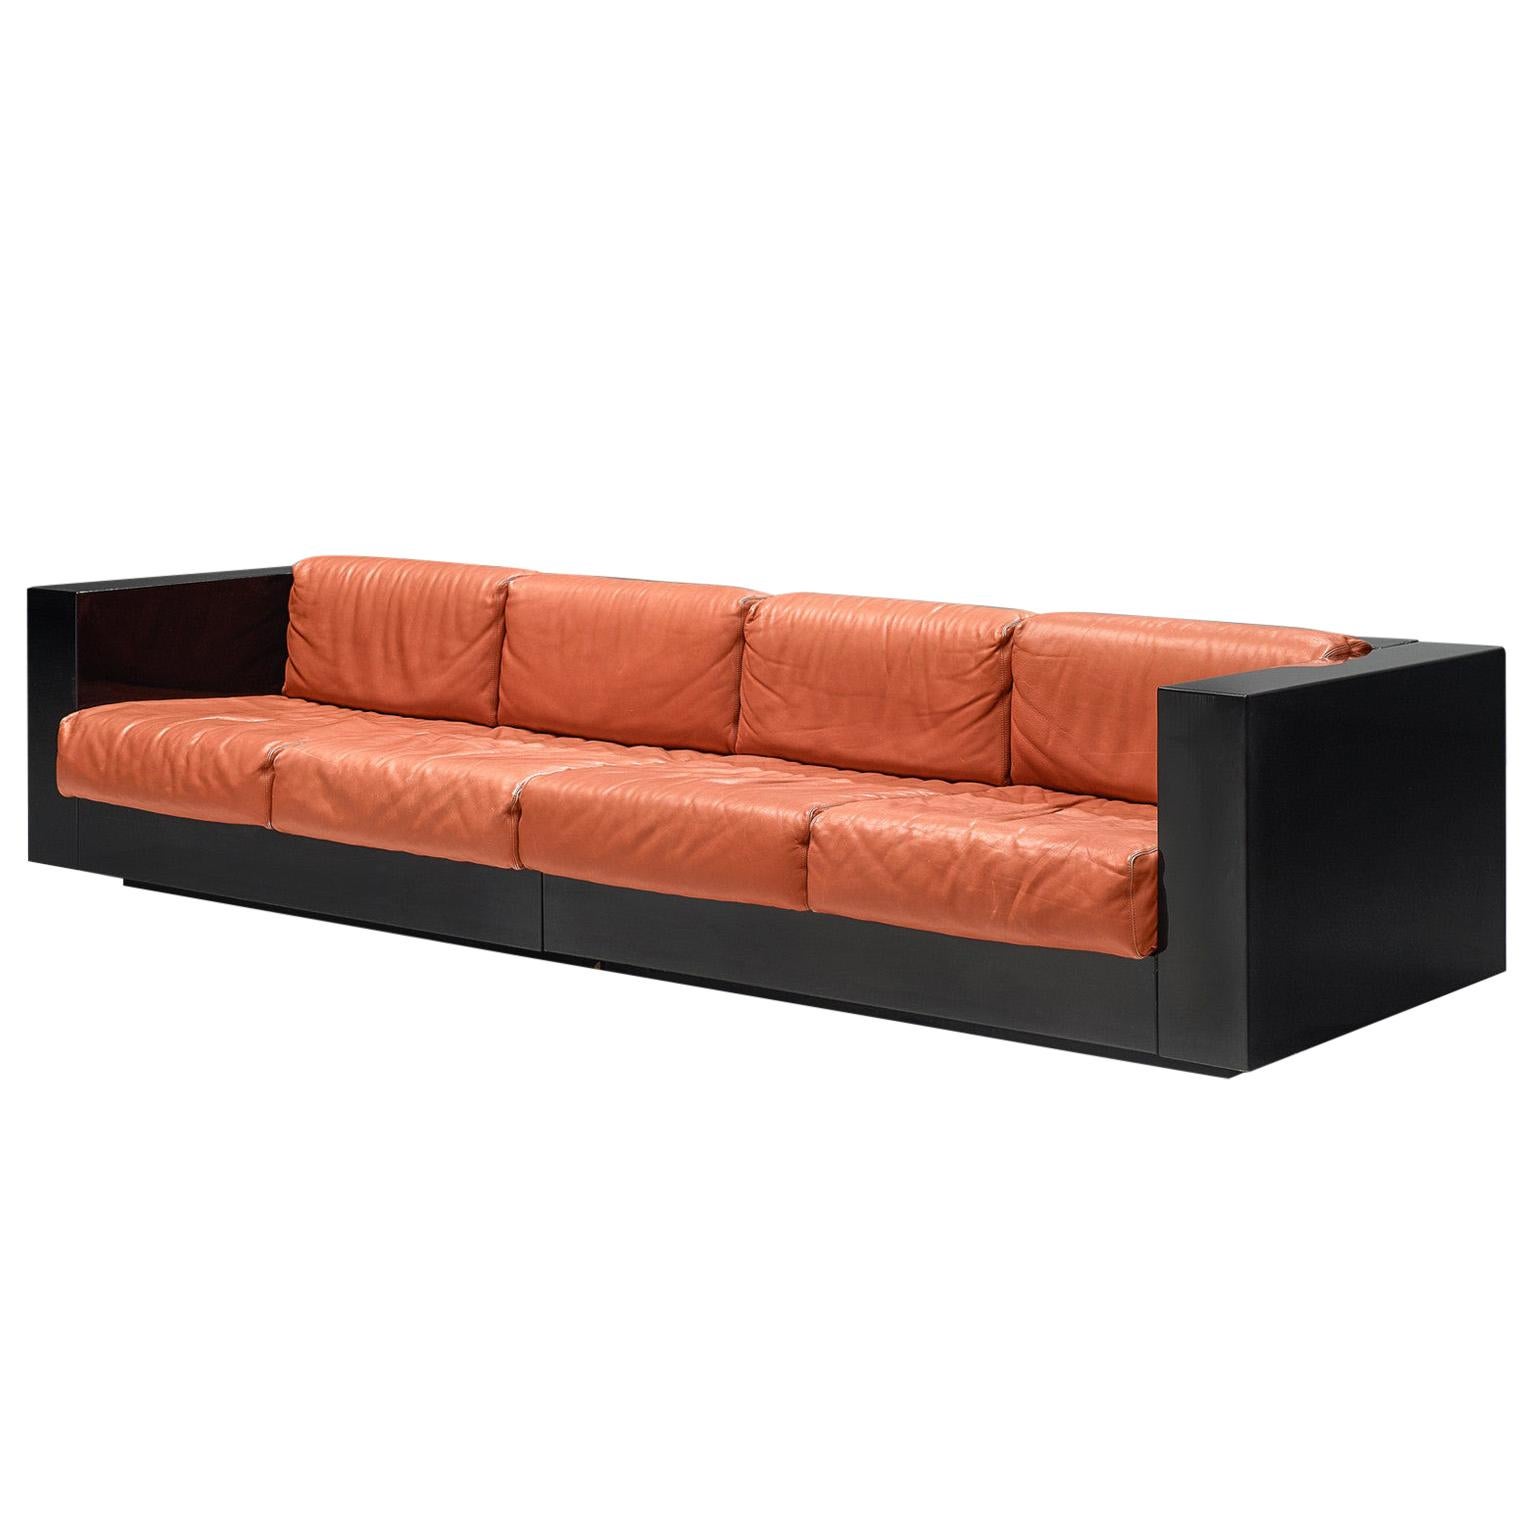 Vignelli Saratoga Large Sofa in Red Leather